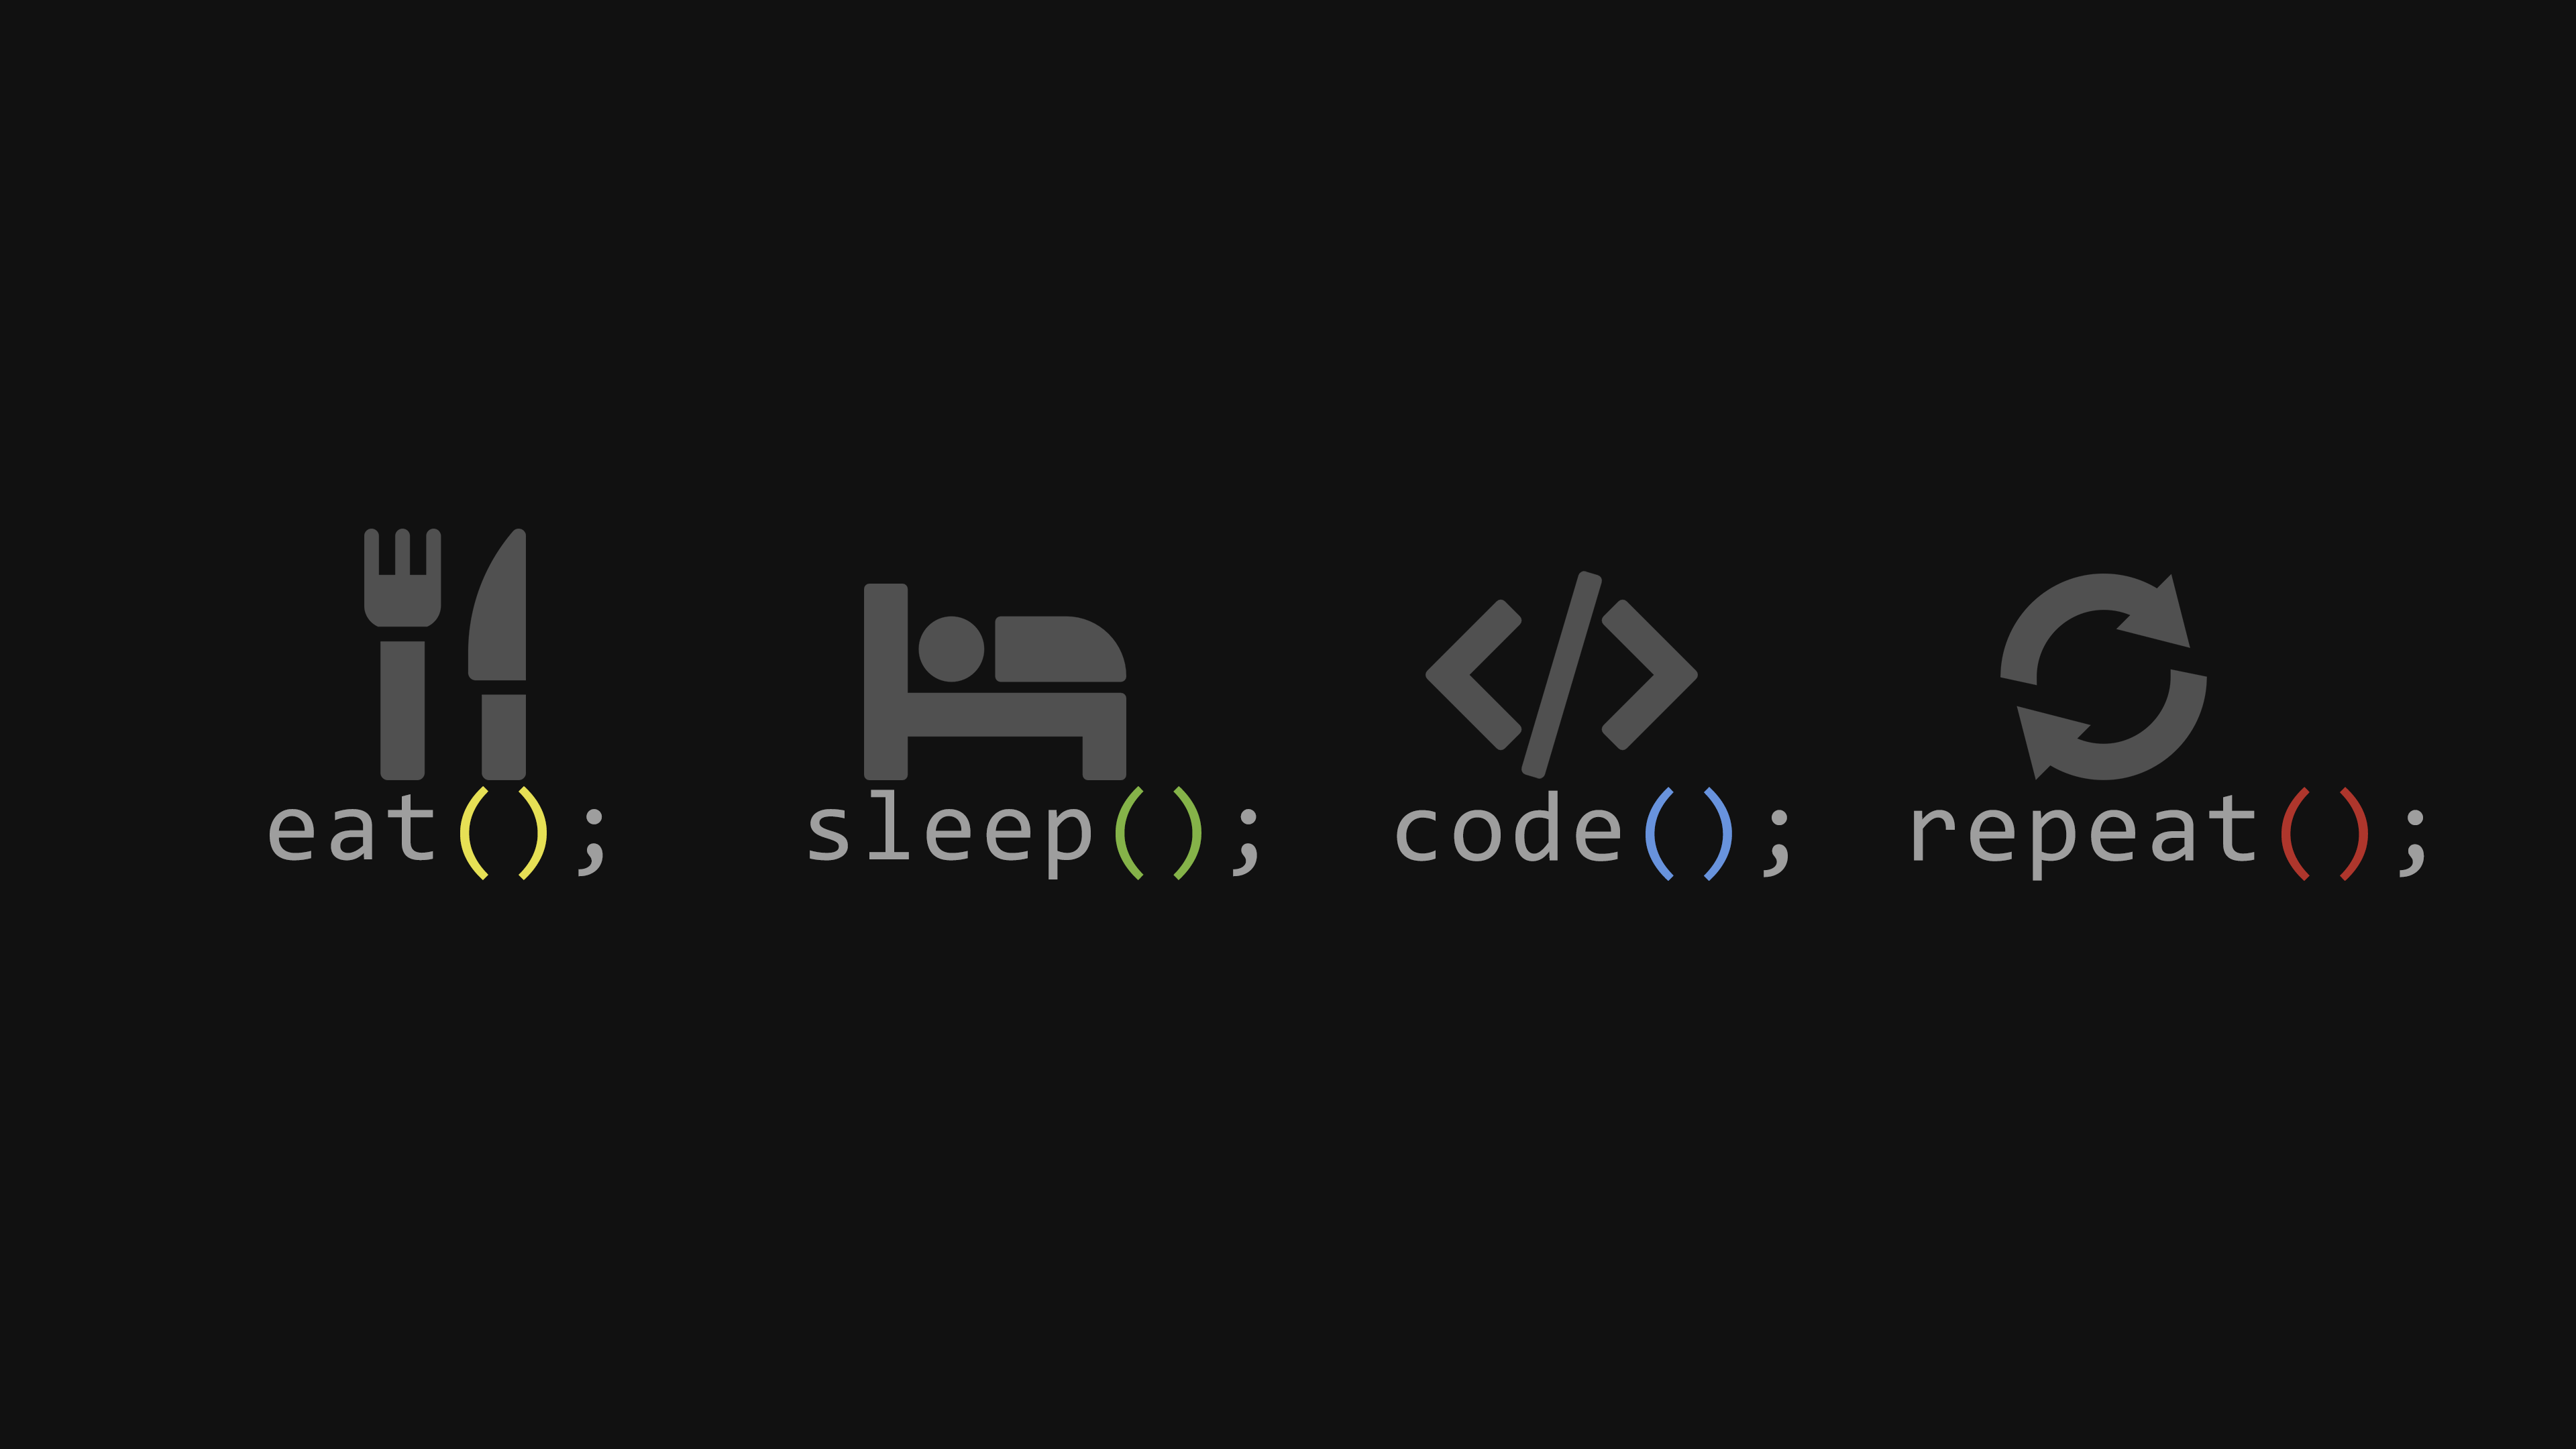 eat(); sleep(); code(); repeat();